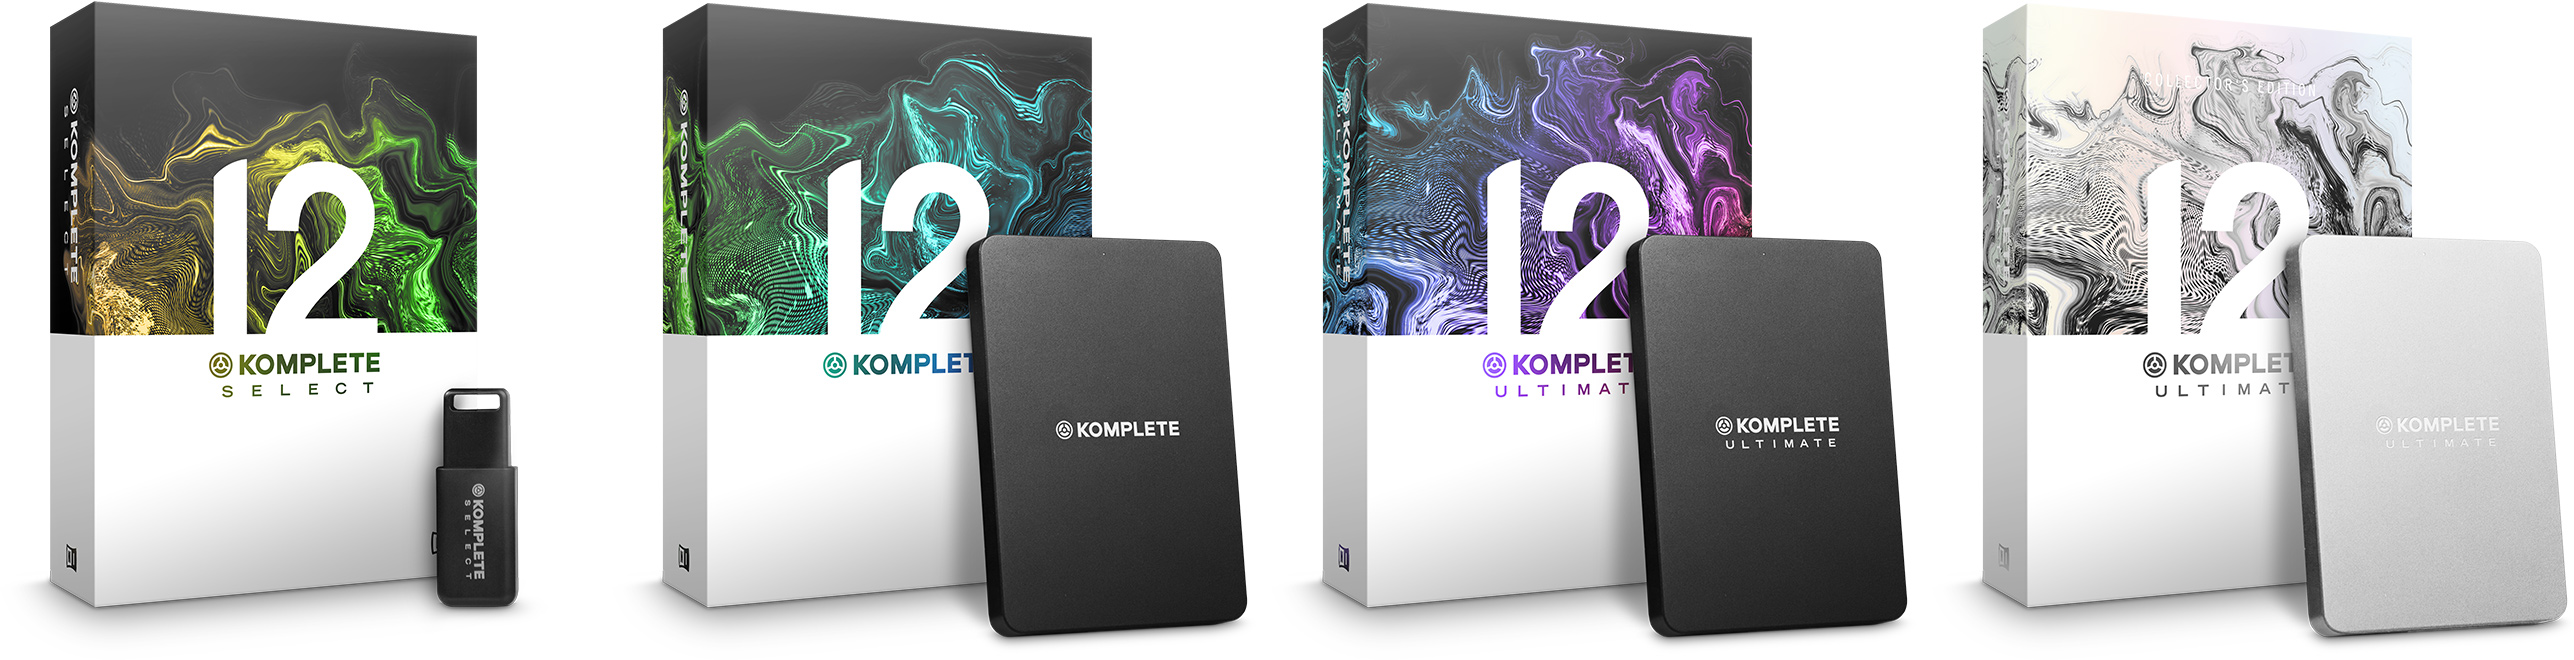 komplete 12 ultimate release date